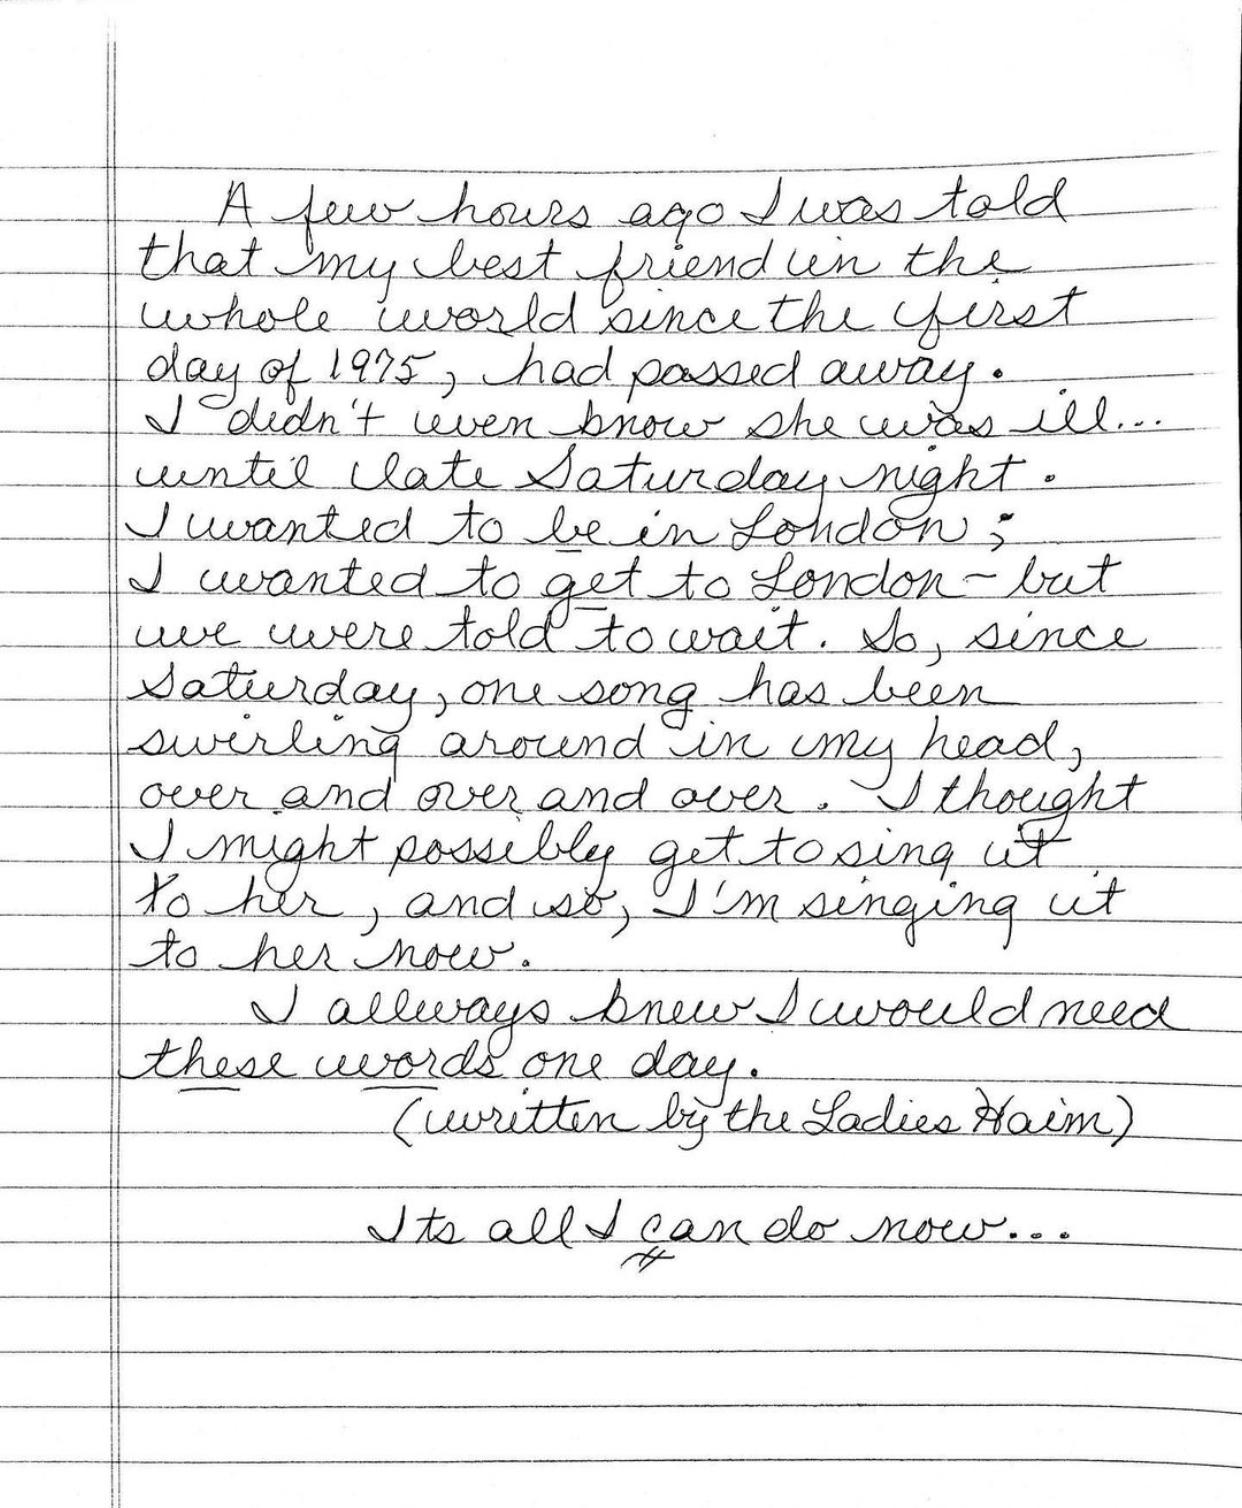 Stevie Nicks' handwritten tribute to Christine McVie